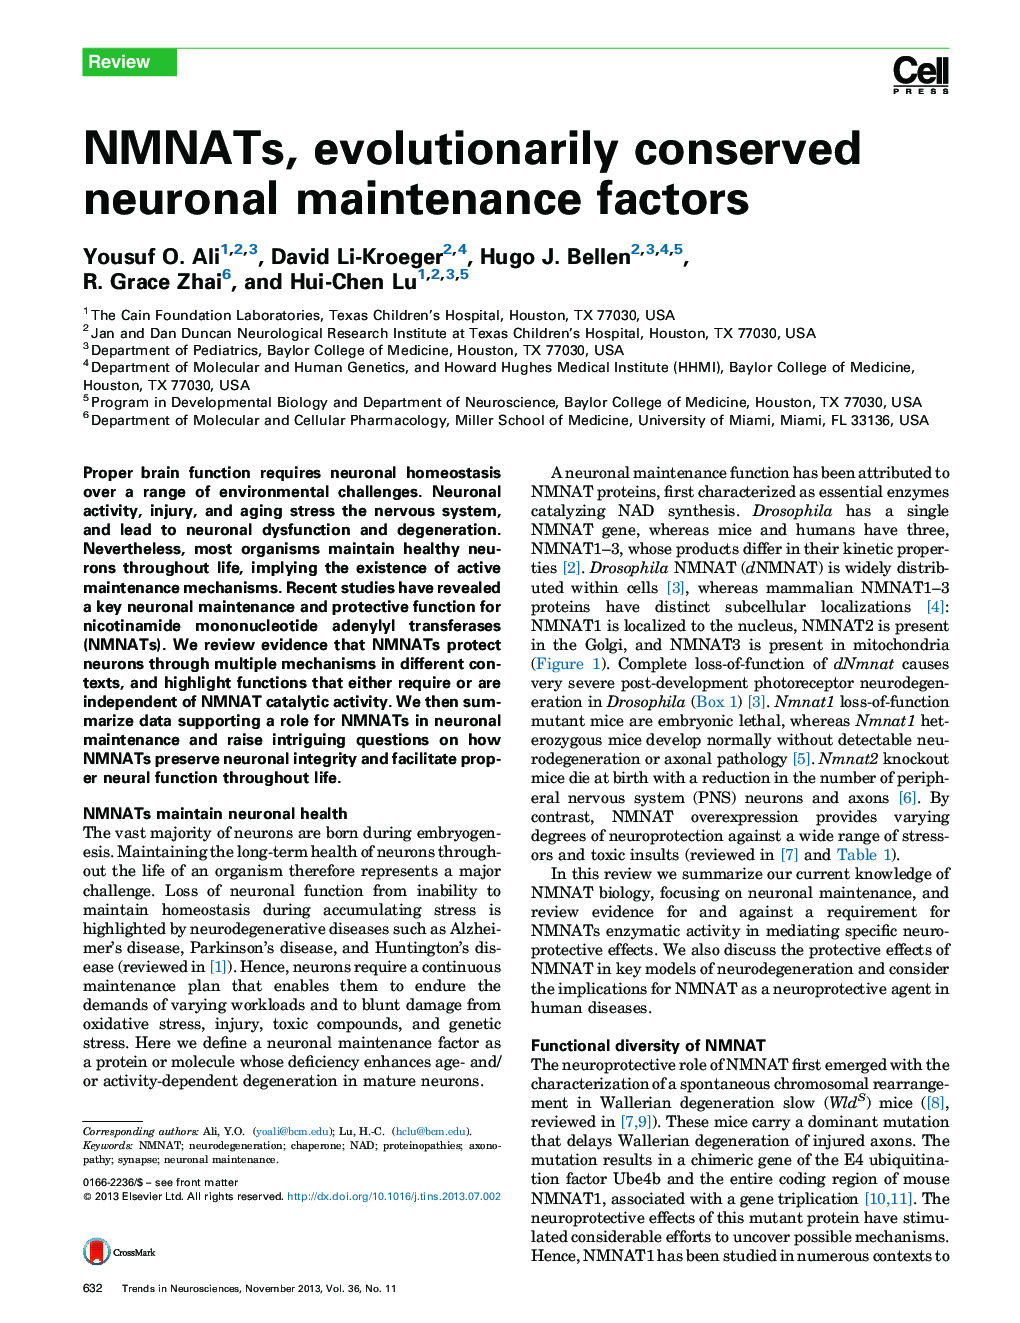 NMNATs, evolutionarily conserved neuronal maintenance factors